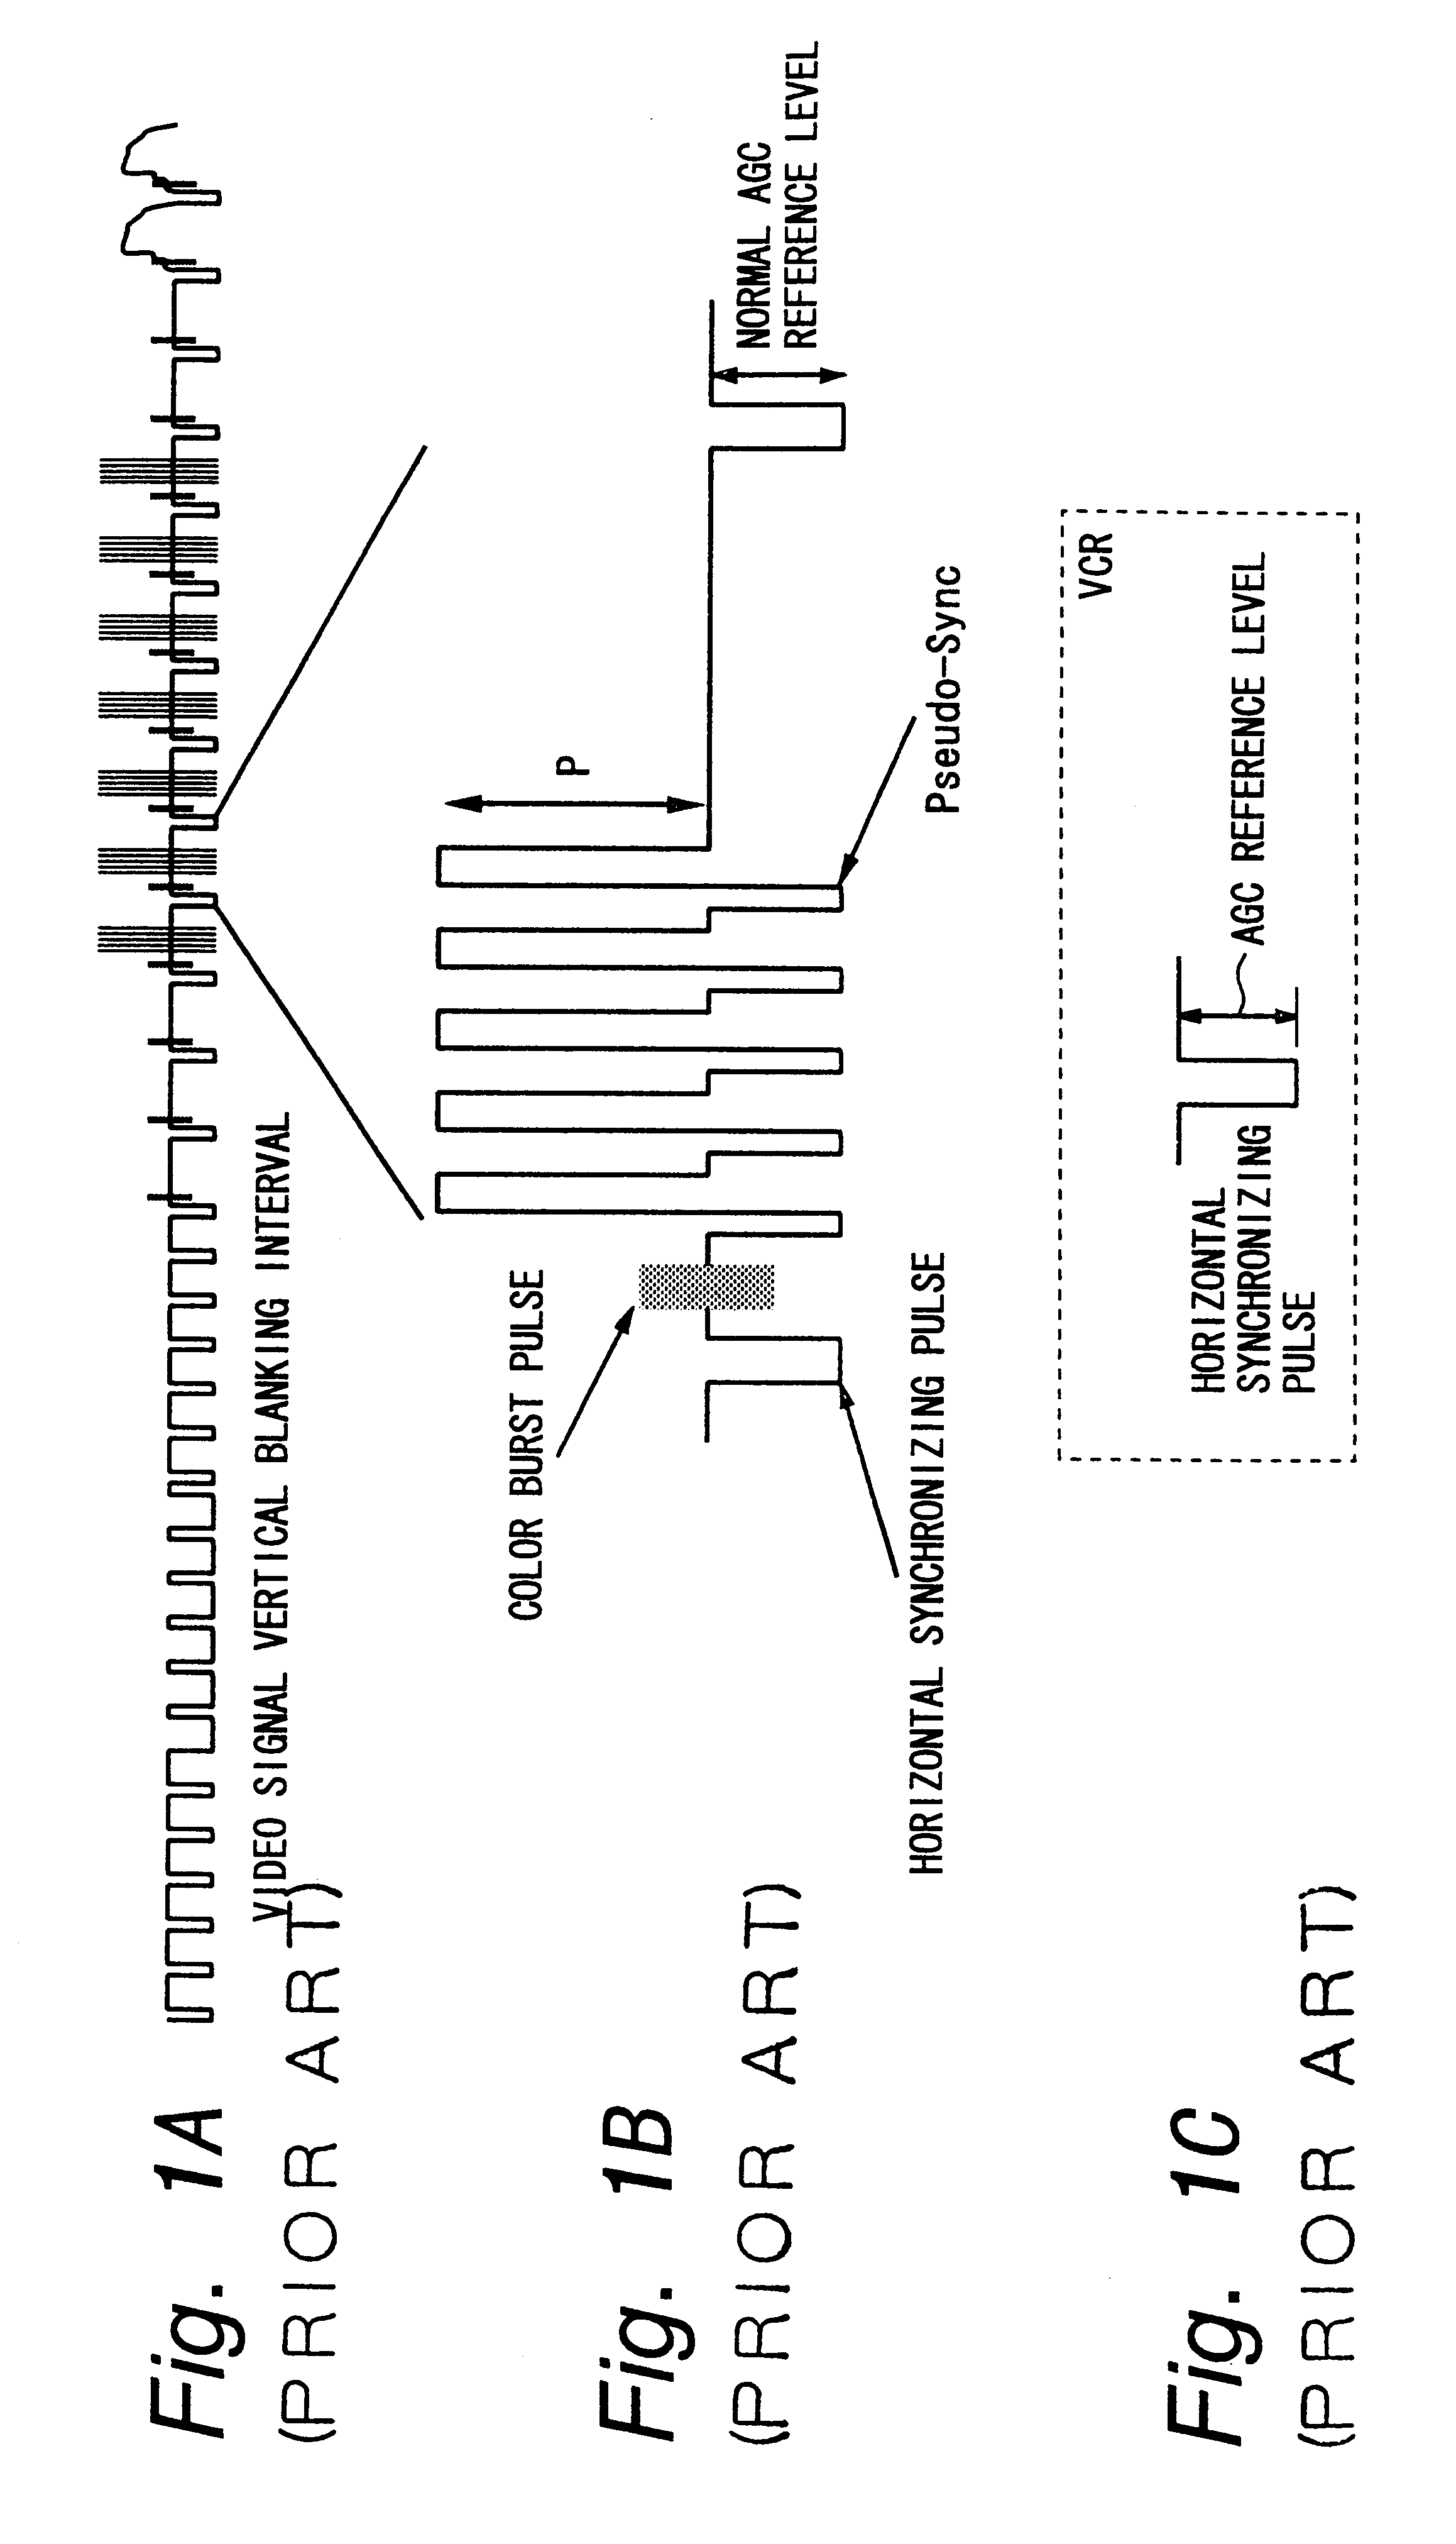 Video signal copy guard apparatus and method